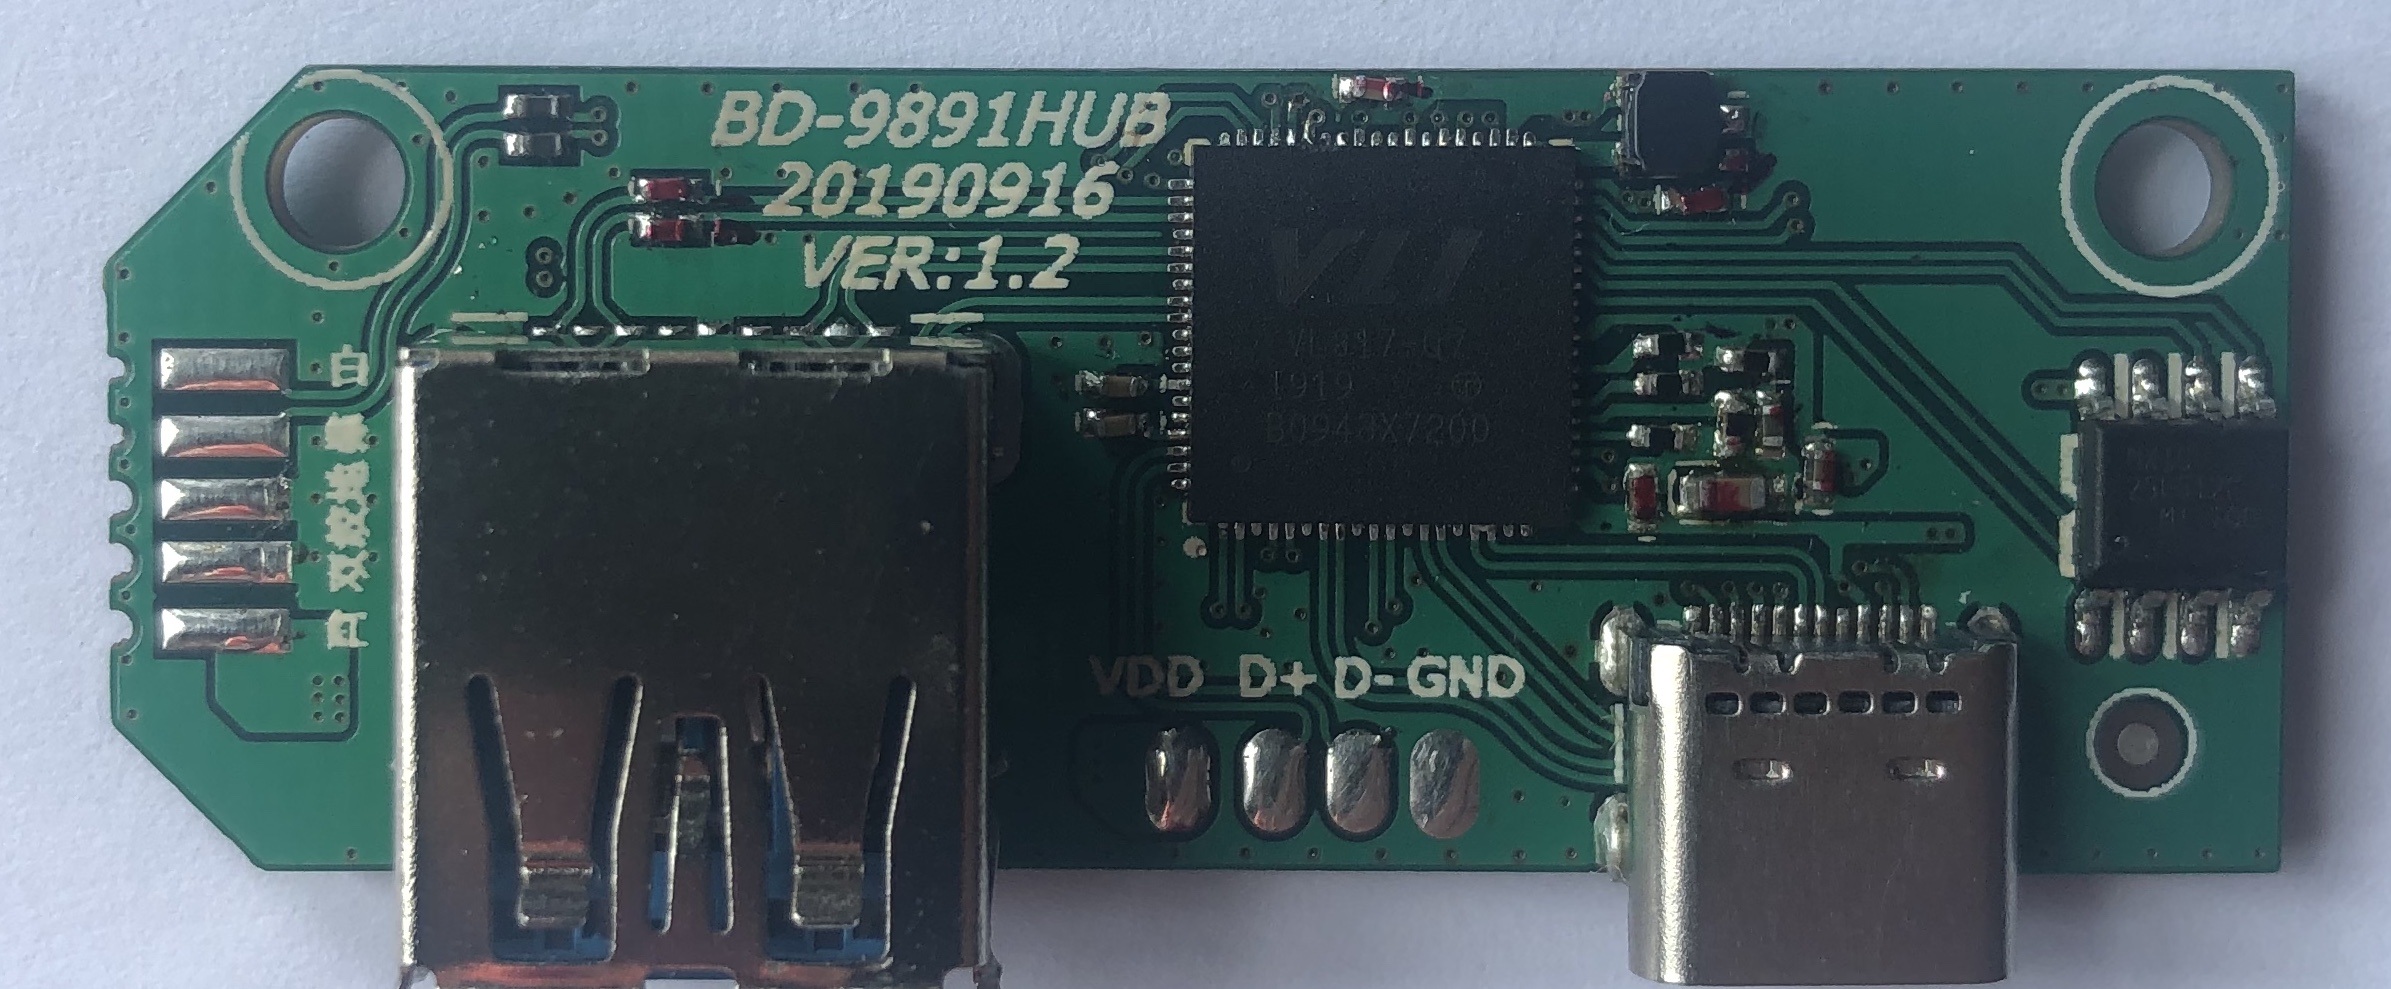 BD-9891HUB , 高速USB3.0 HUB 芯片 ，TYPE-C接口.JPG